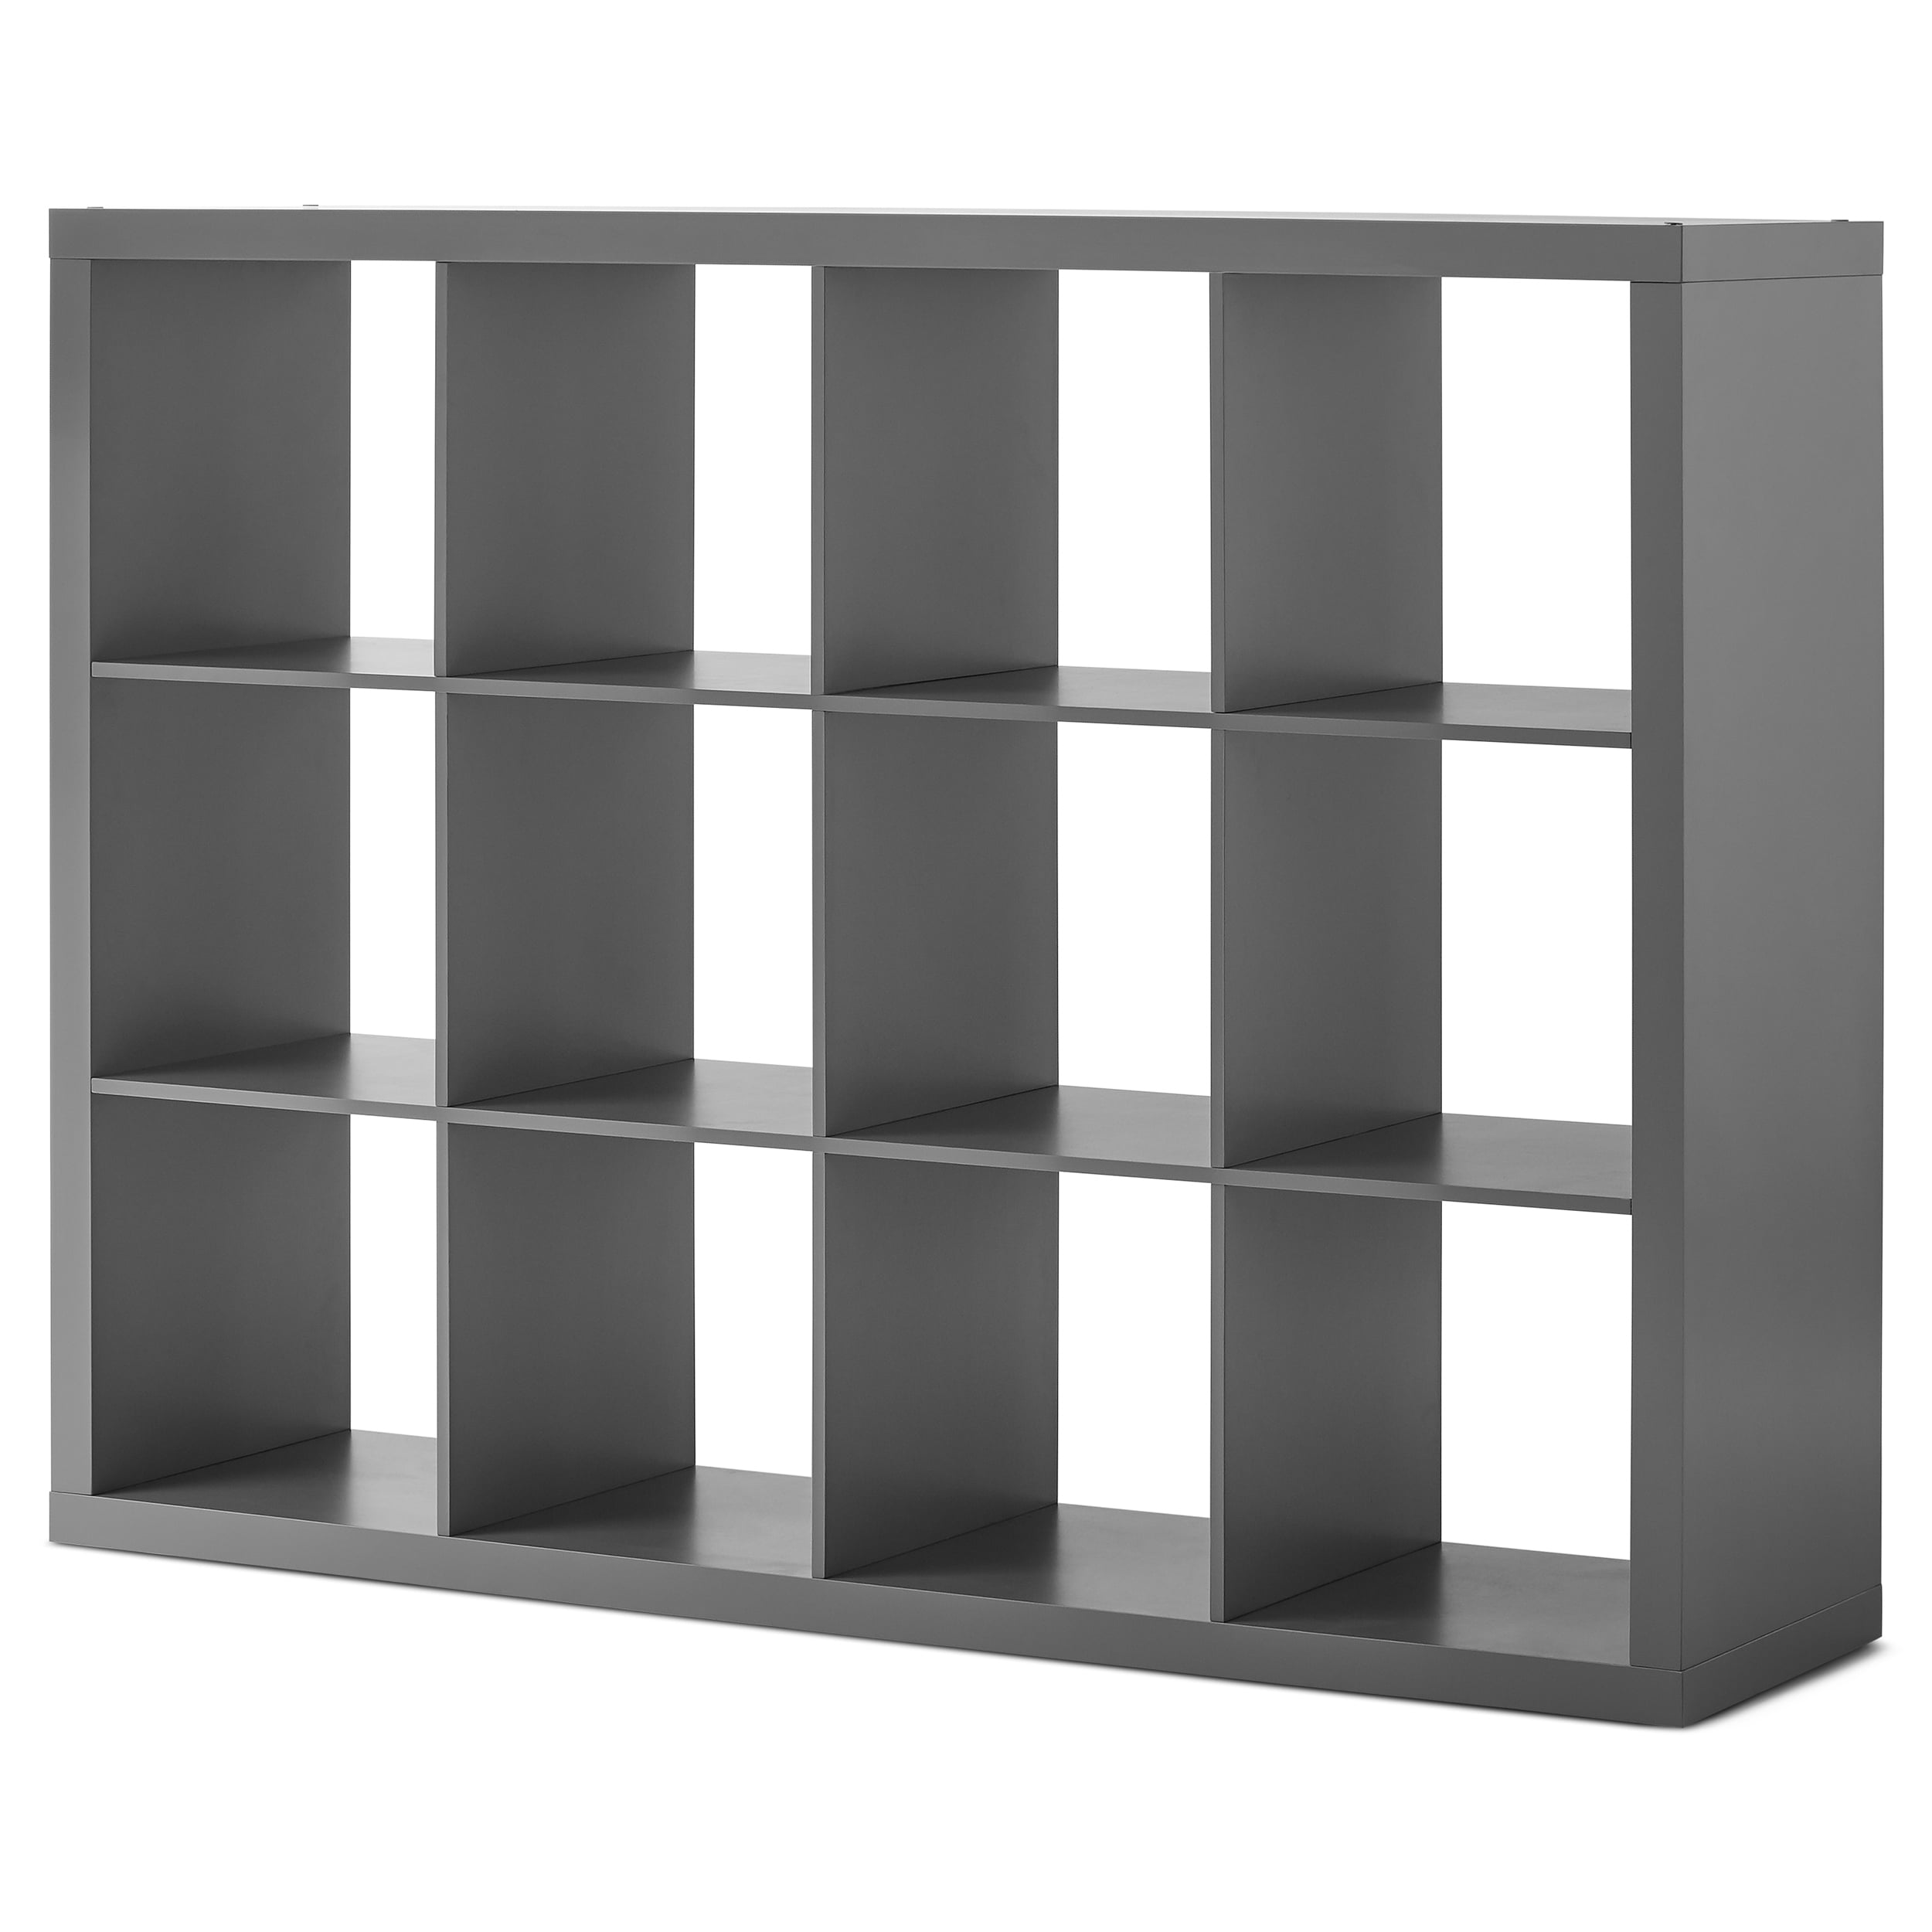 9 Cube Storage Organizer Natural, Cube Shelves Bookcase